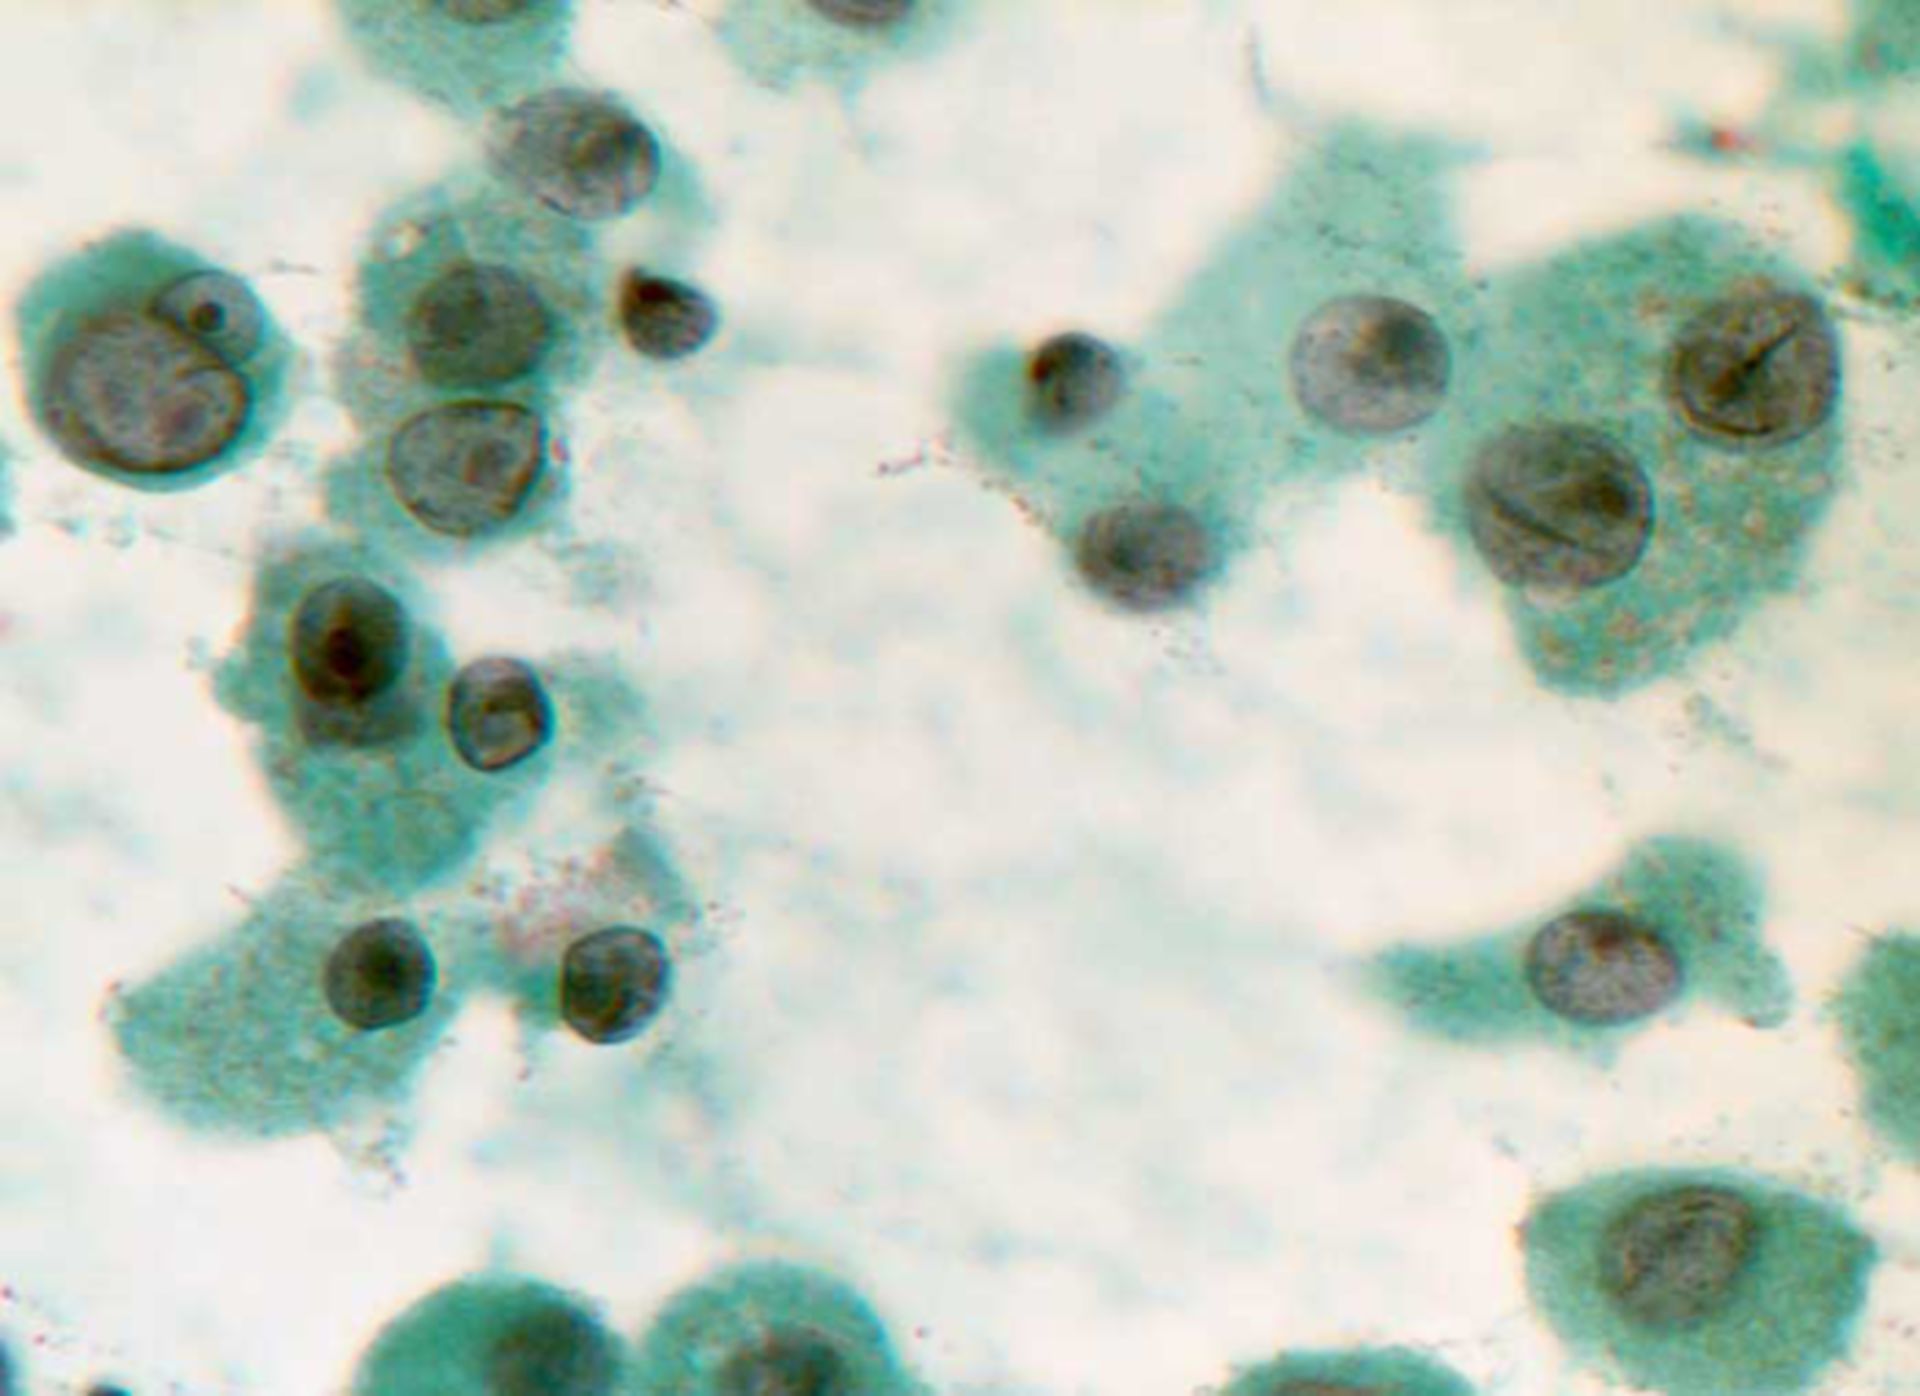 Oncocytic microfollicular neoplasia